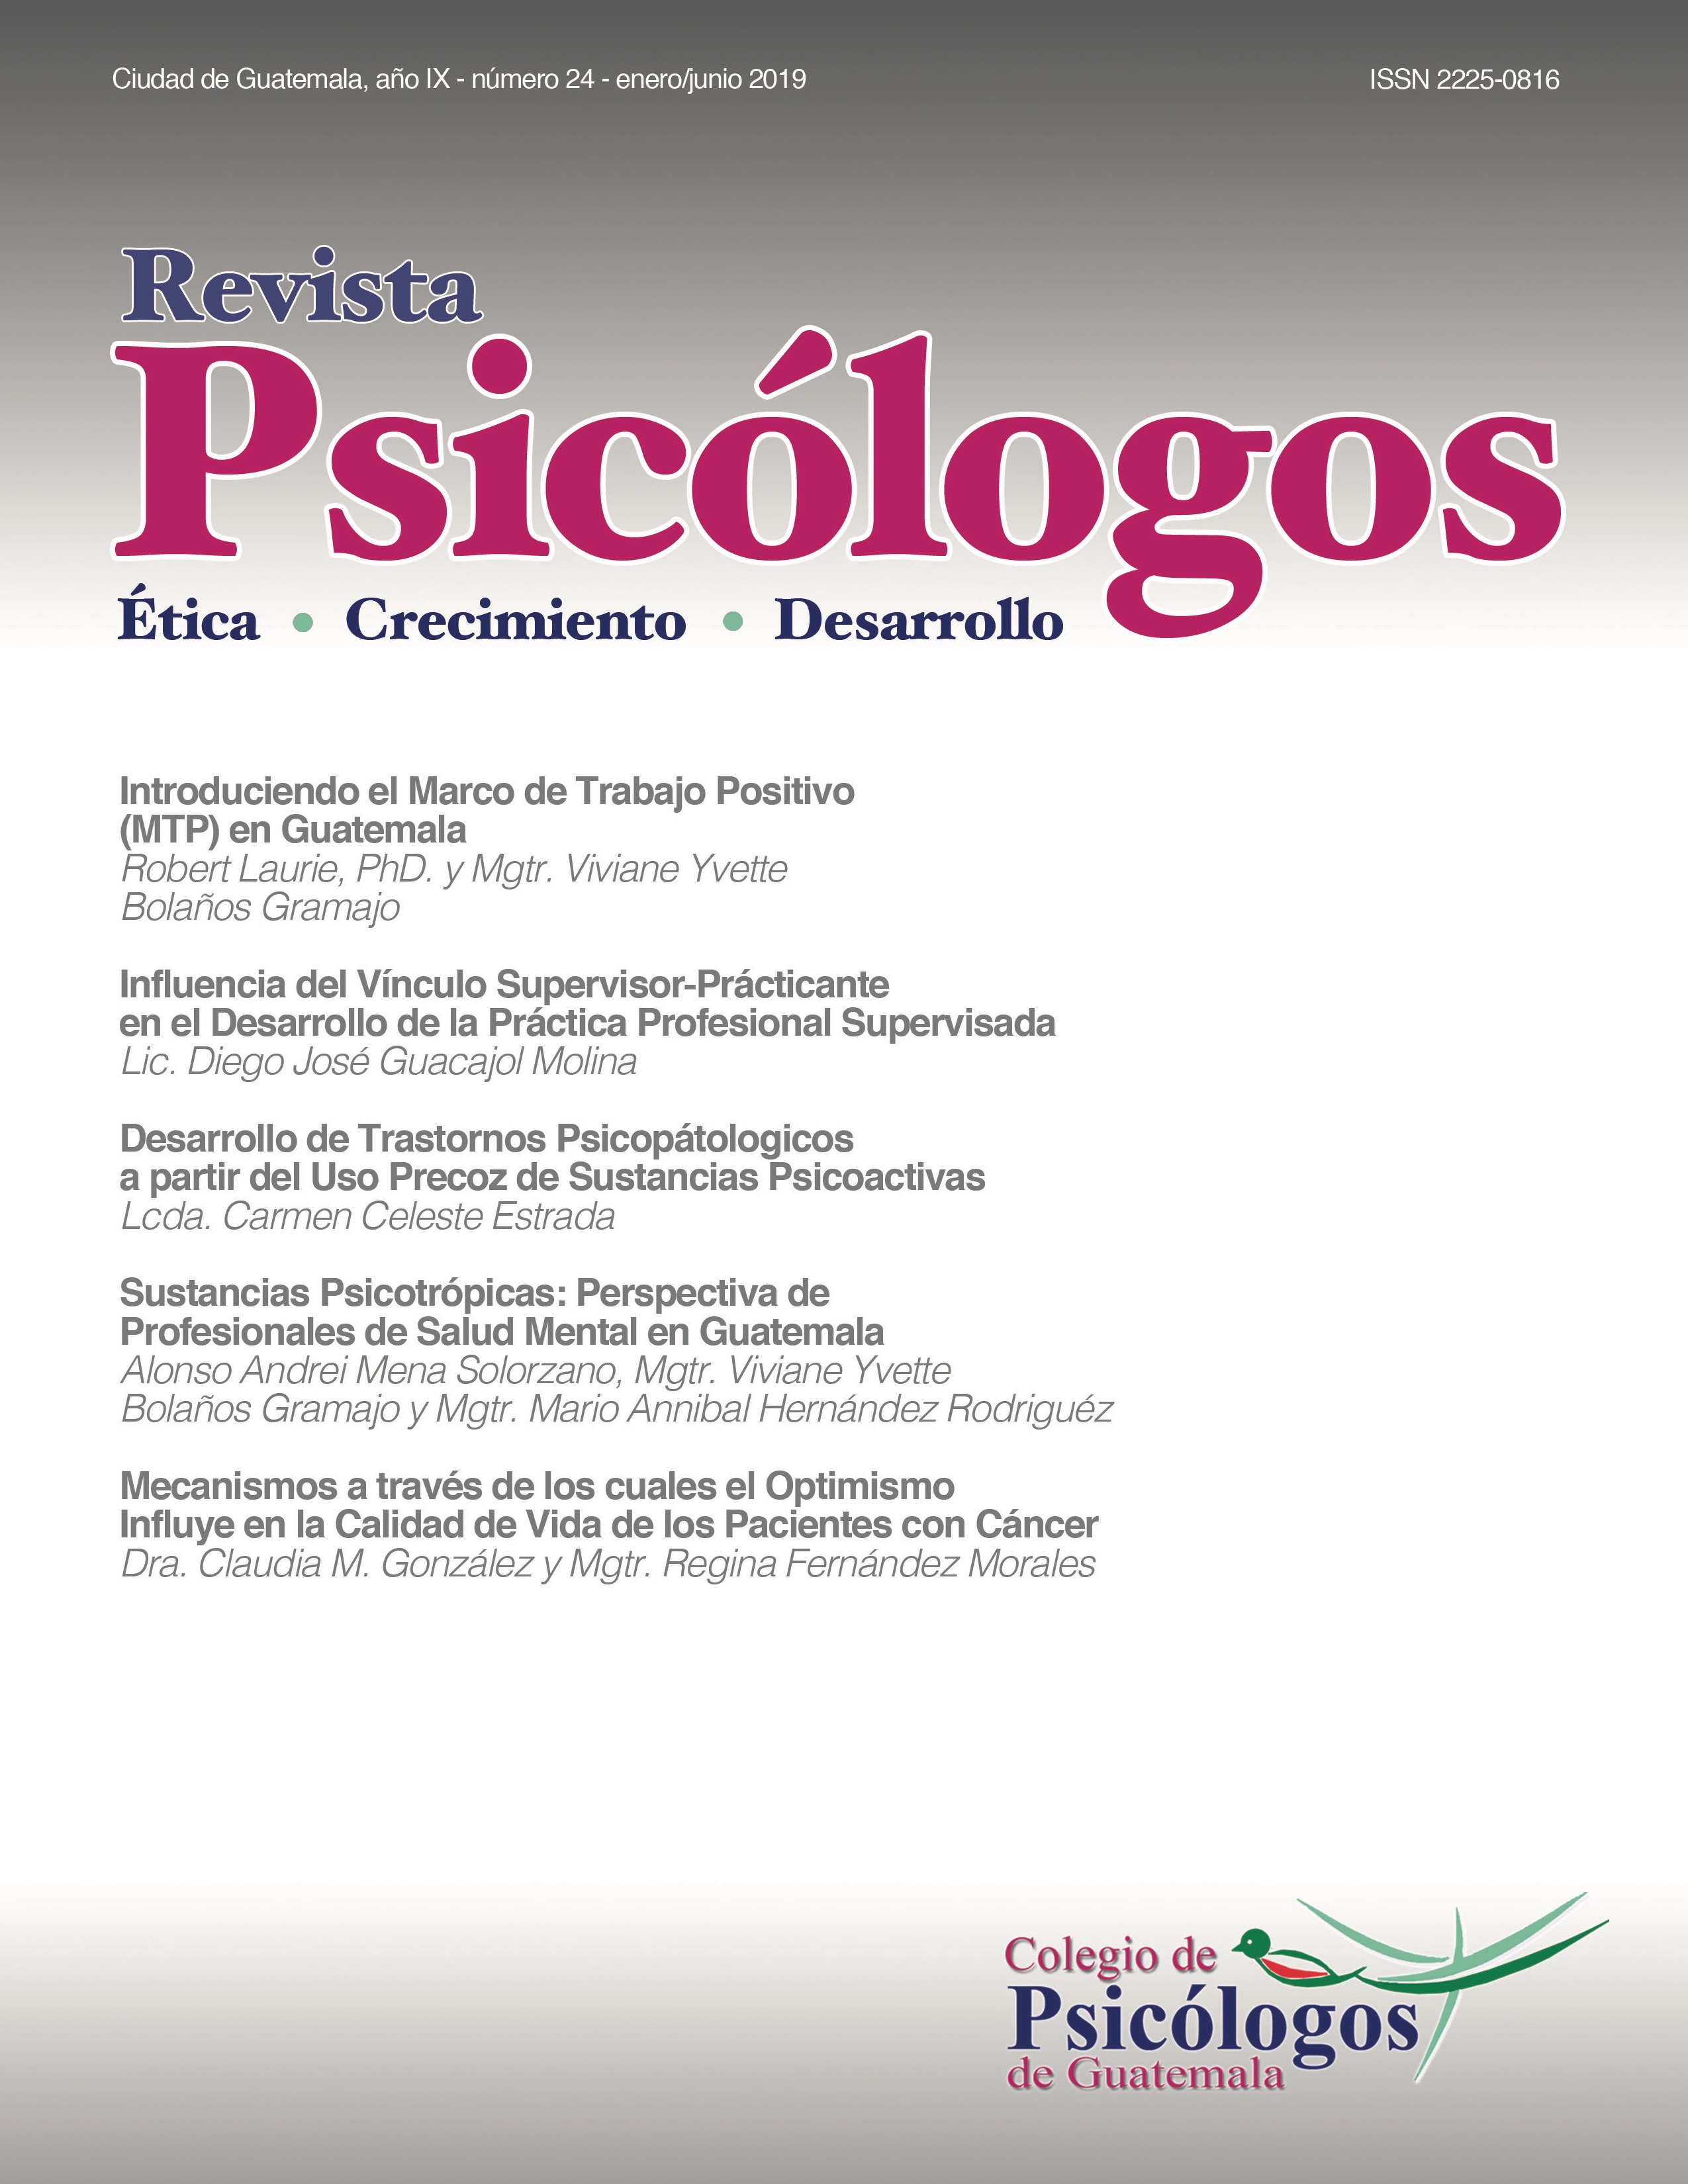 					Ver Vol. 9 Núm. 24 (2019): Revista Psicólogos No. 24
				